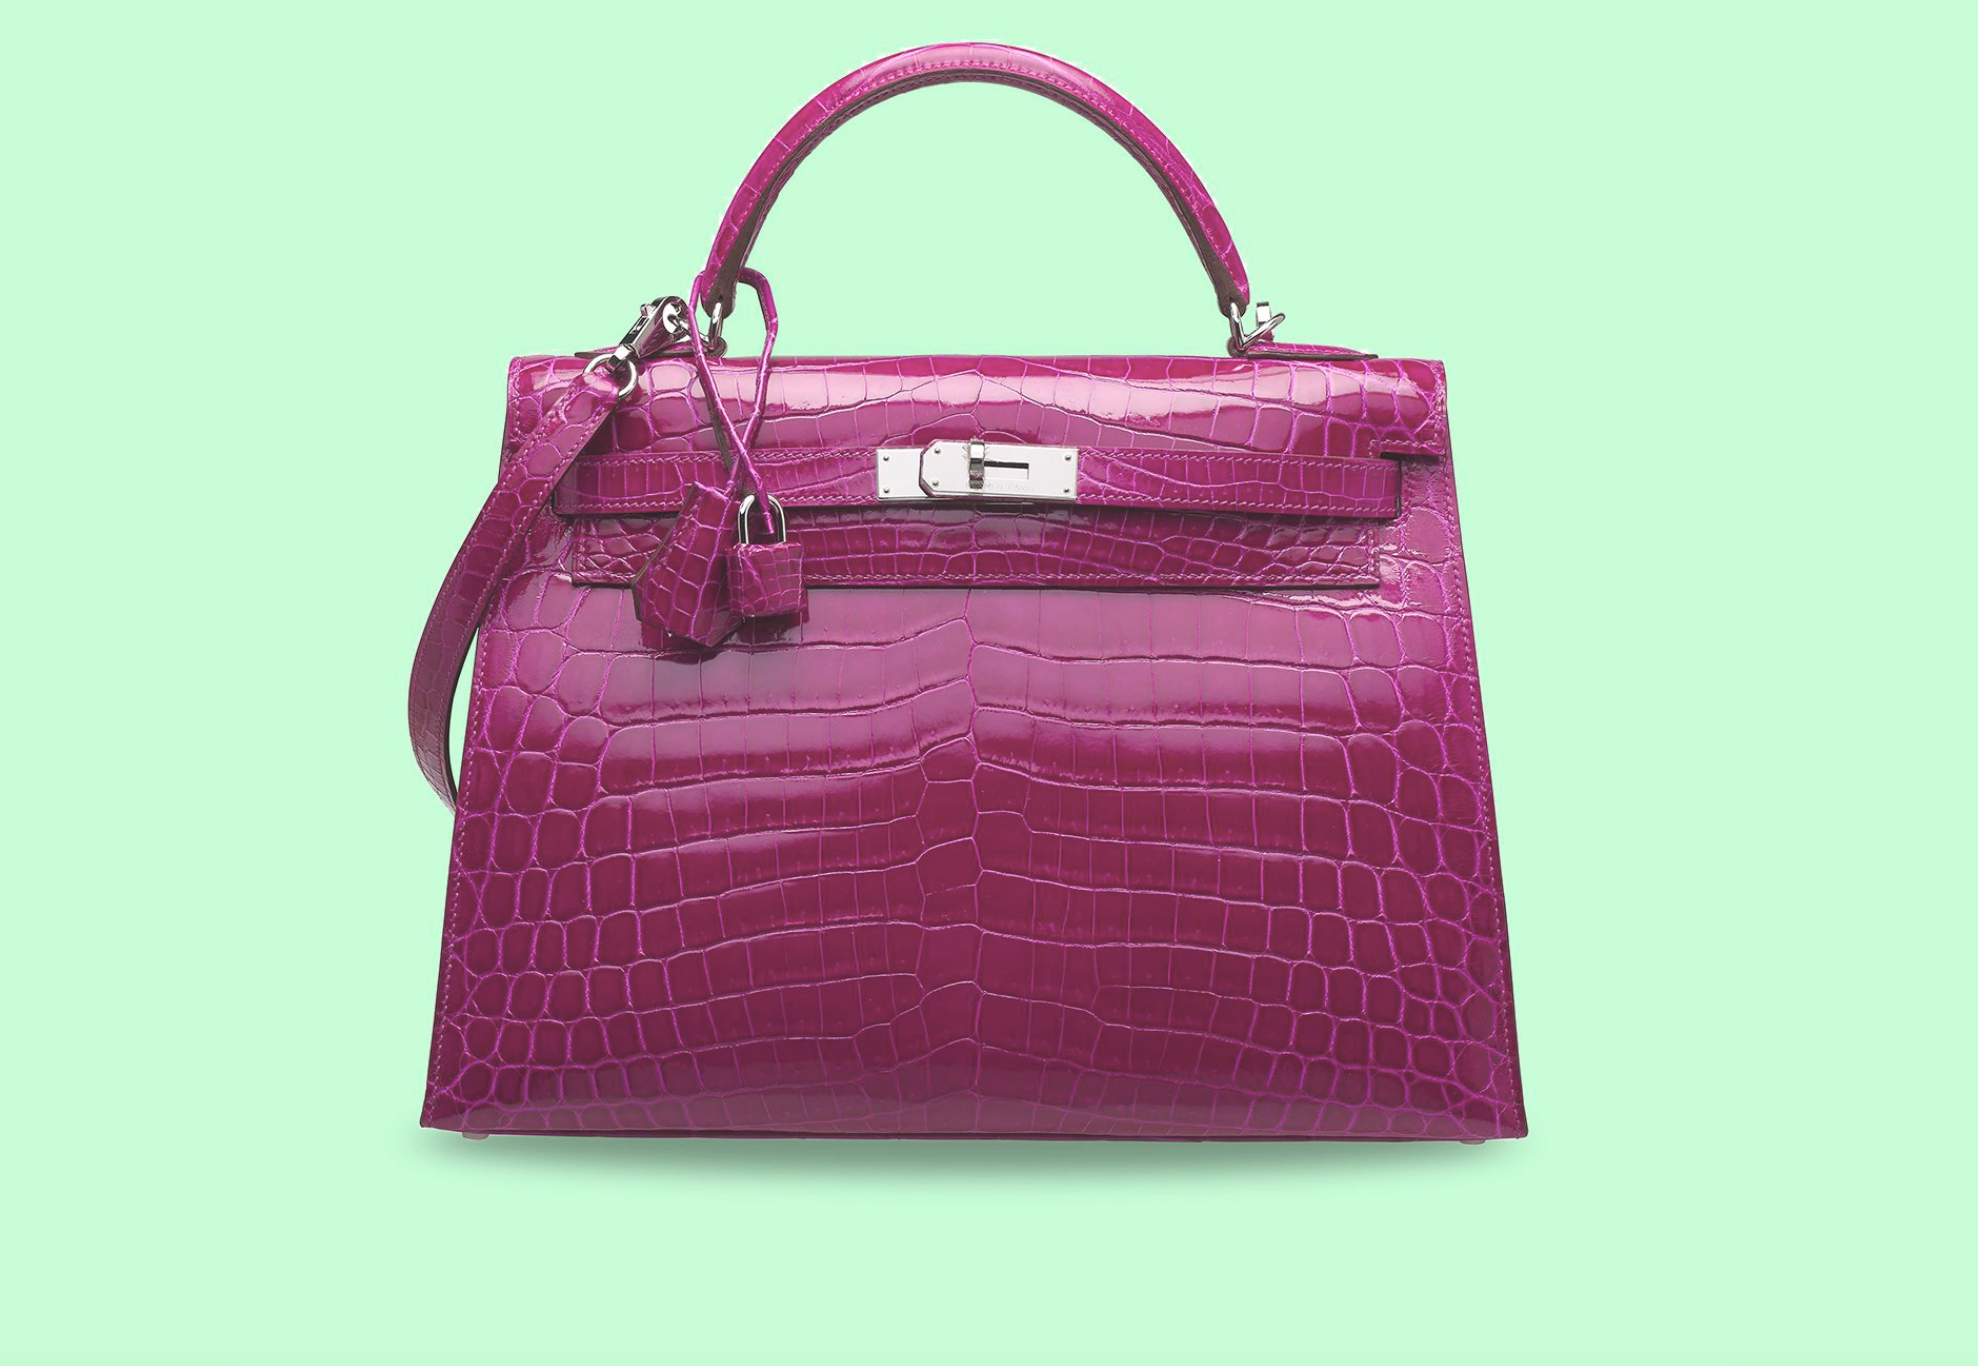 Luxury Designer Bag Investment Series: Hermès Kelly Bag Review